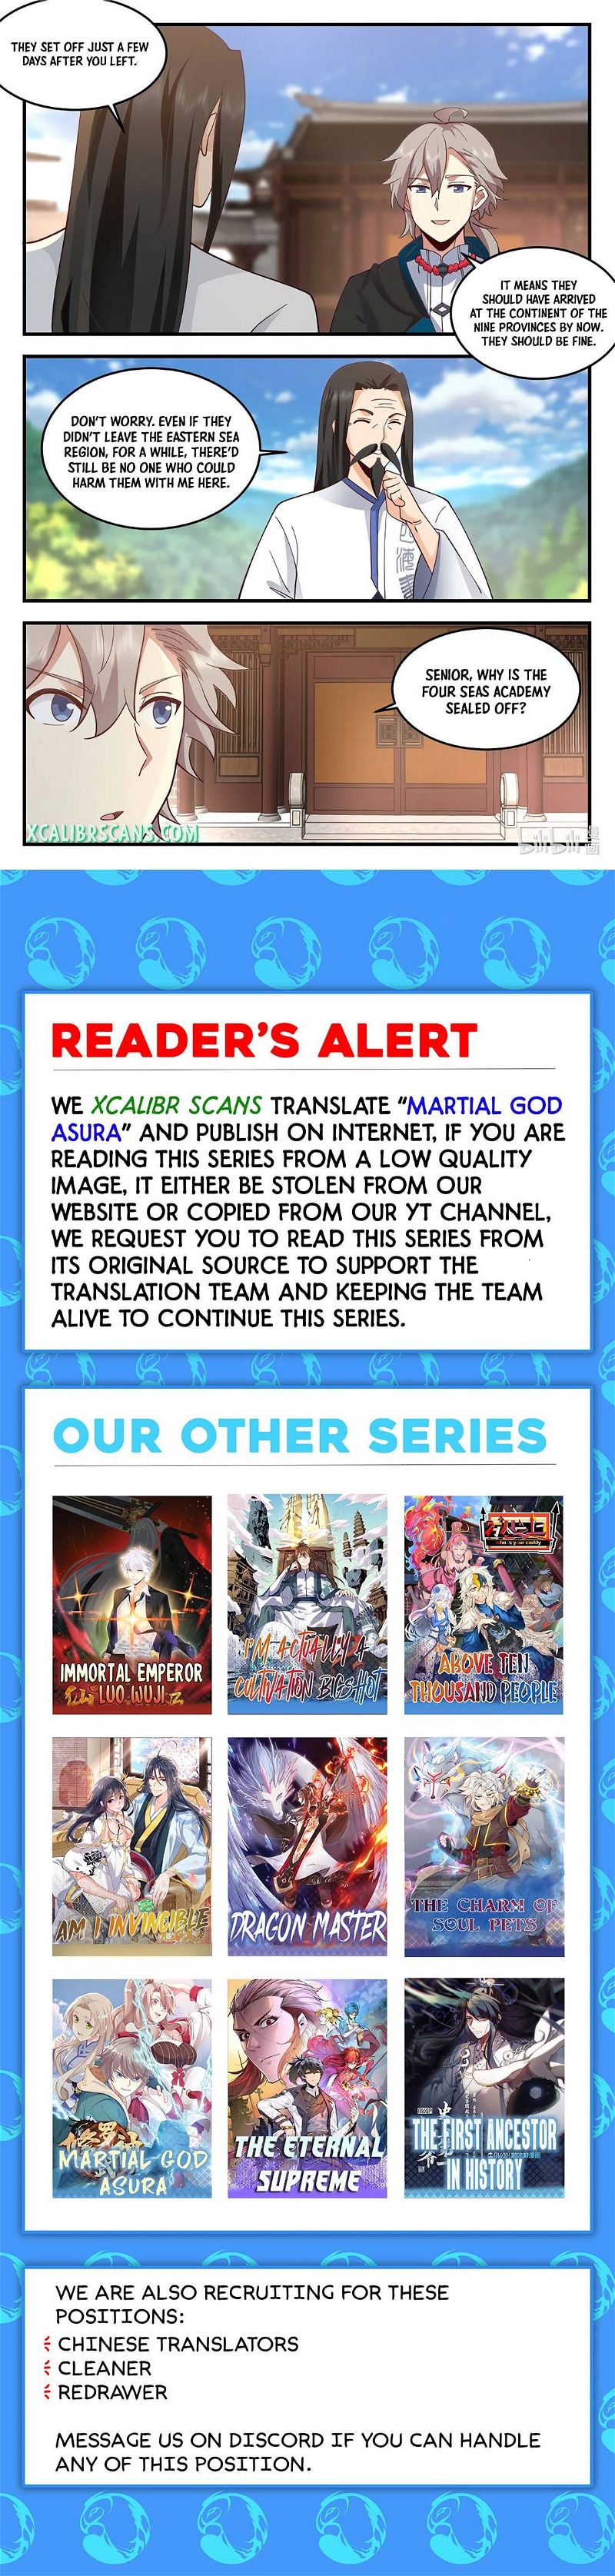 Martial God Asura Chapter 543 page 10